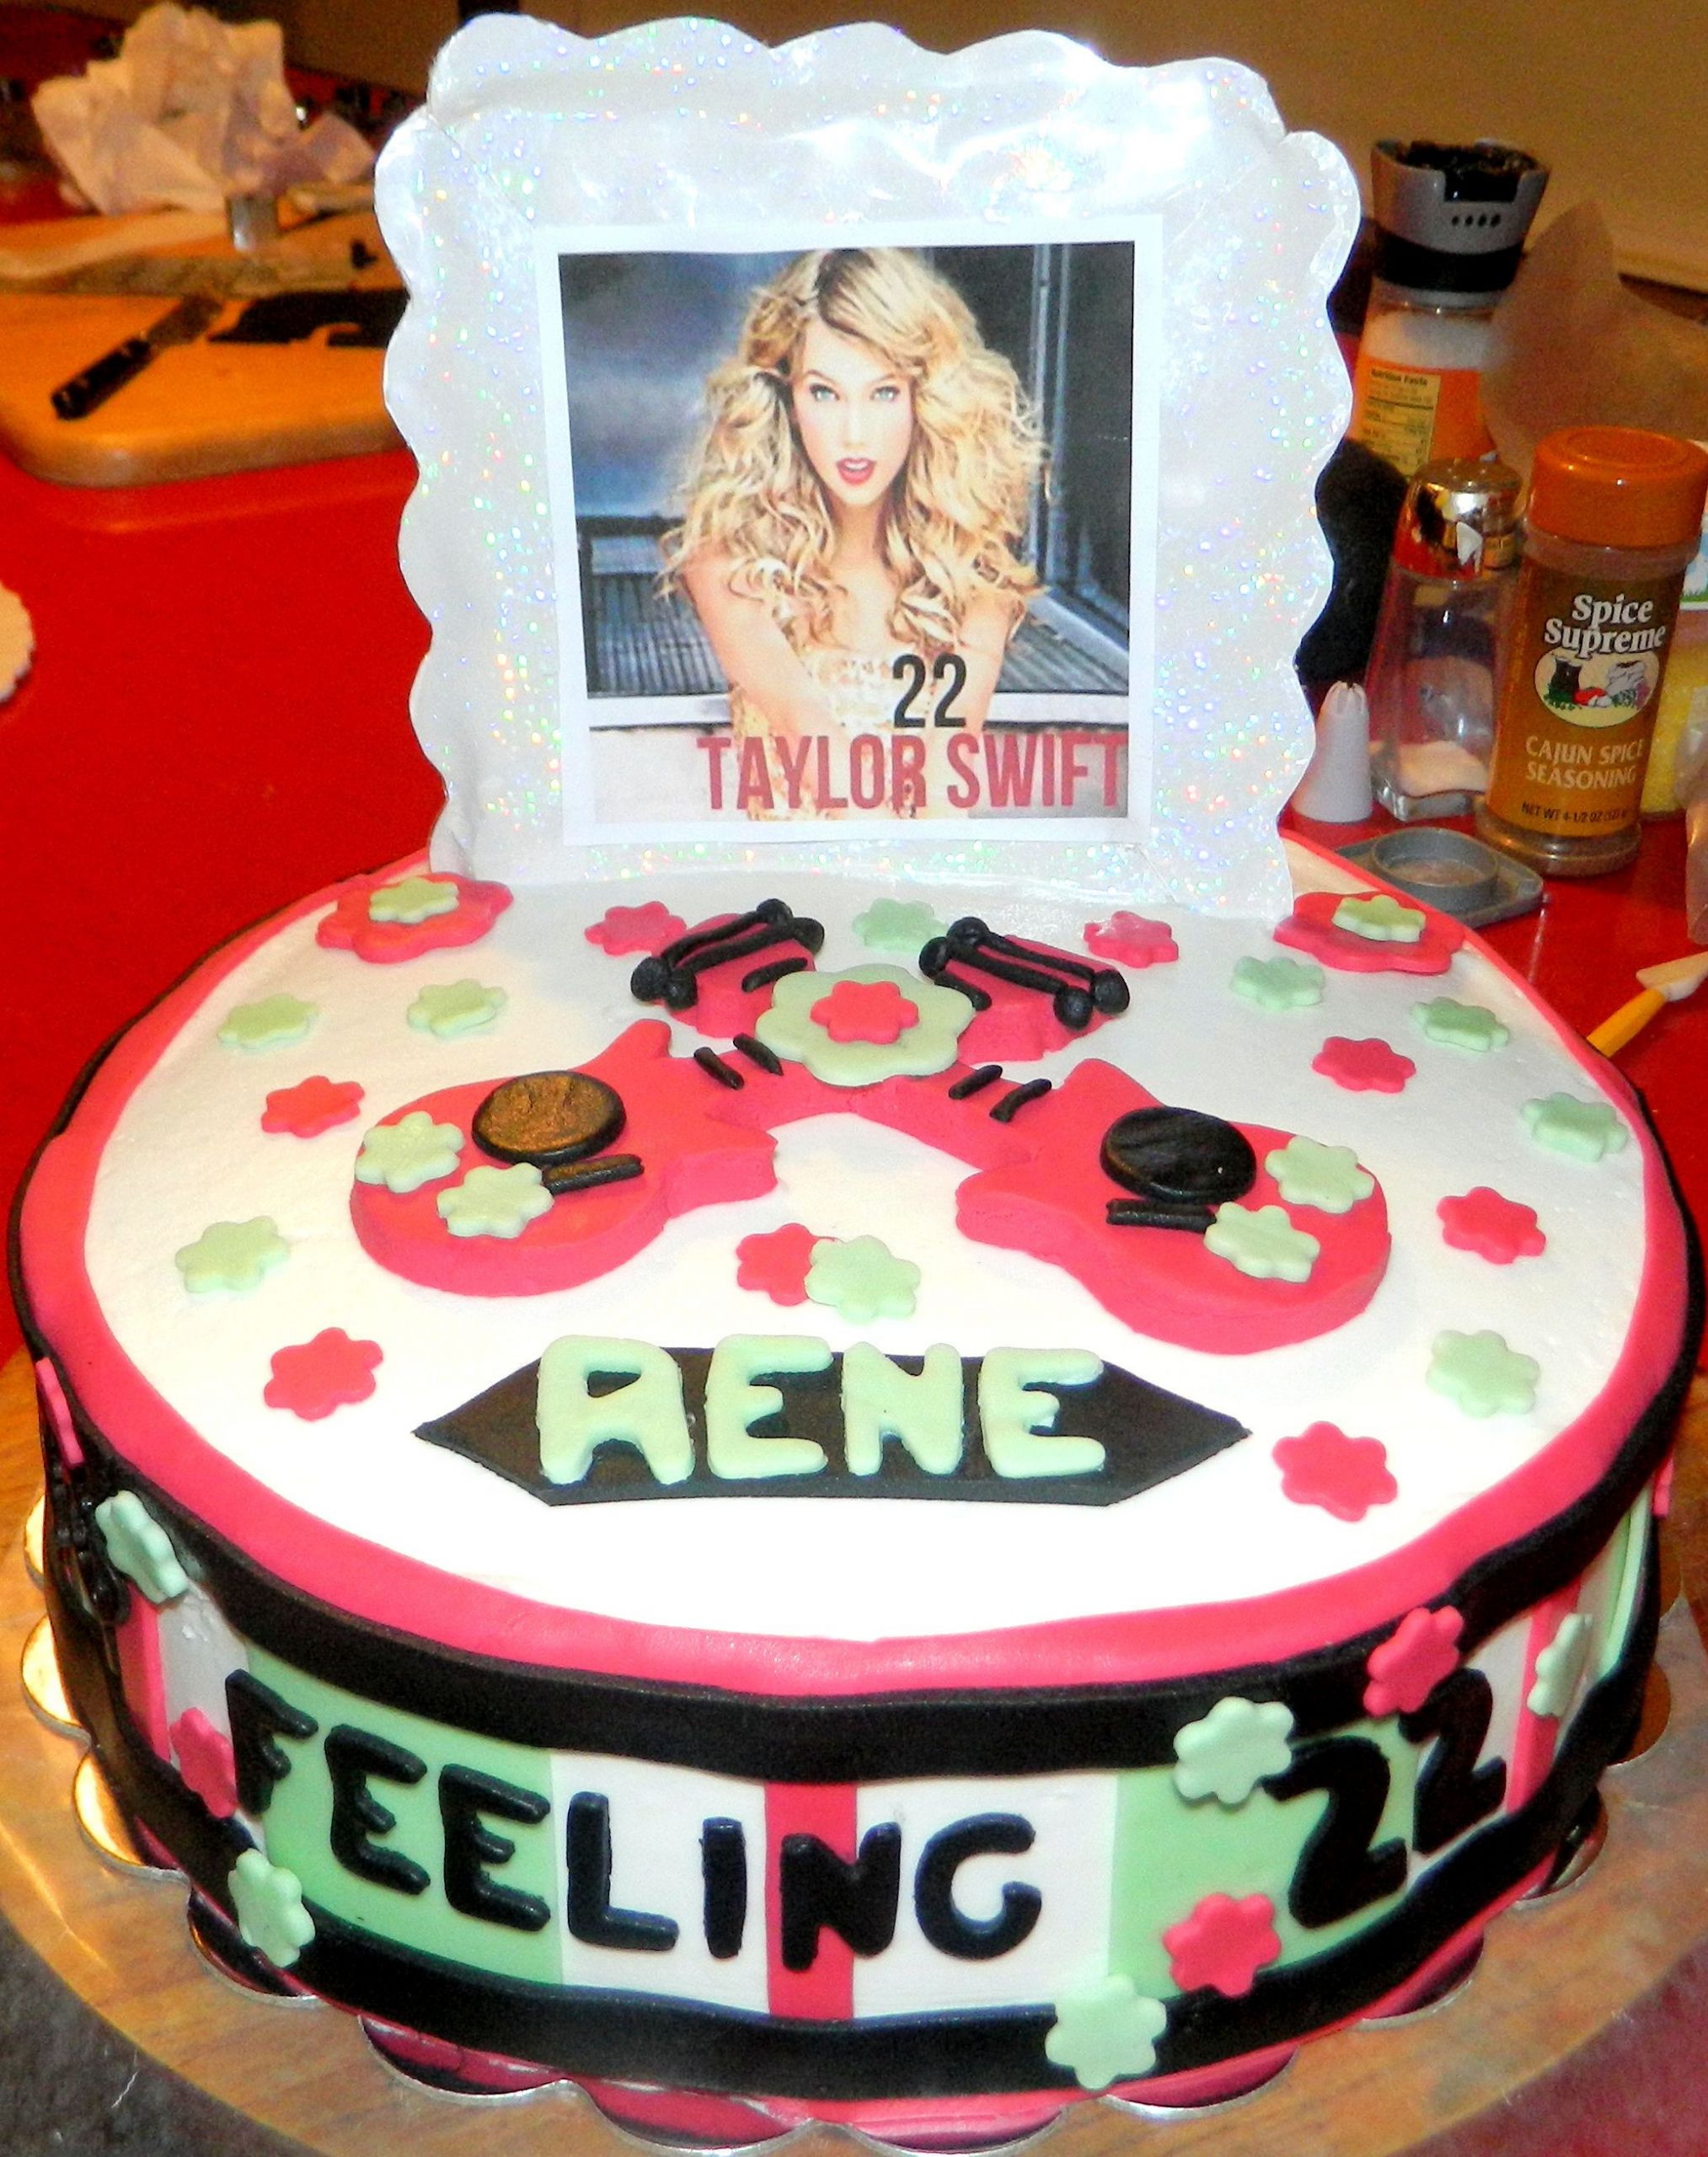 Taylor Swift Birthday Cake
 Taylor Swift Cake "Feeling 22" My Crafts